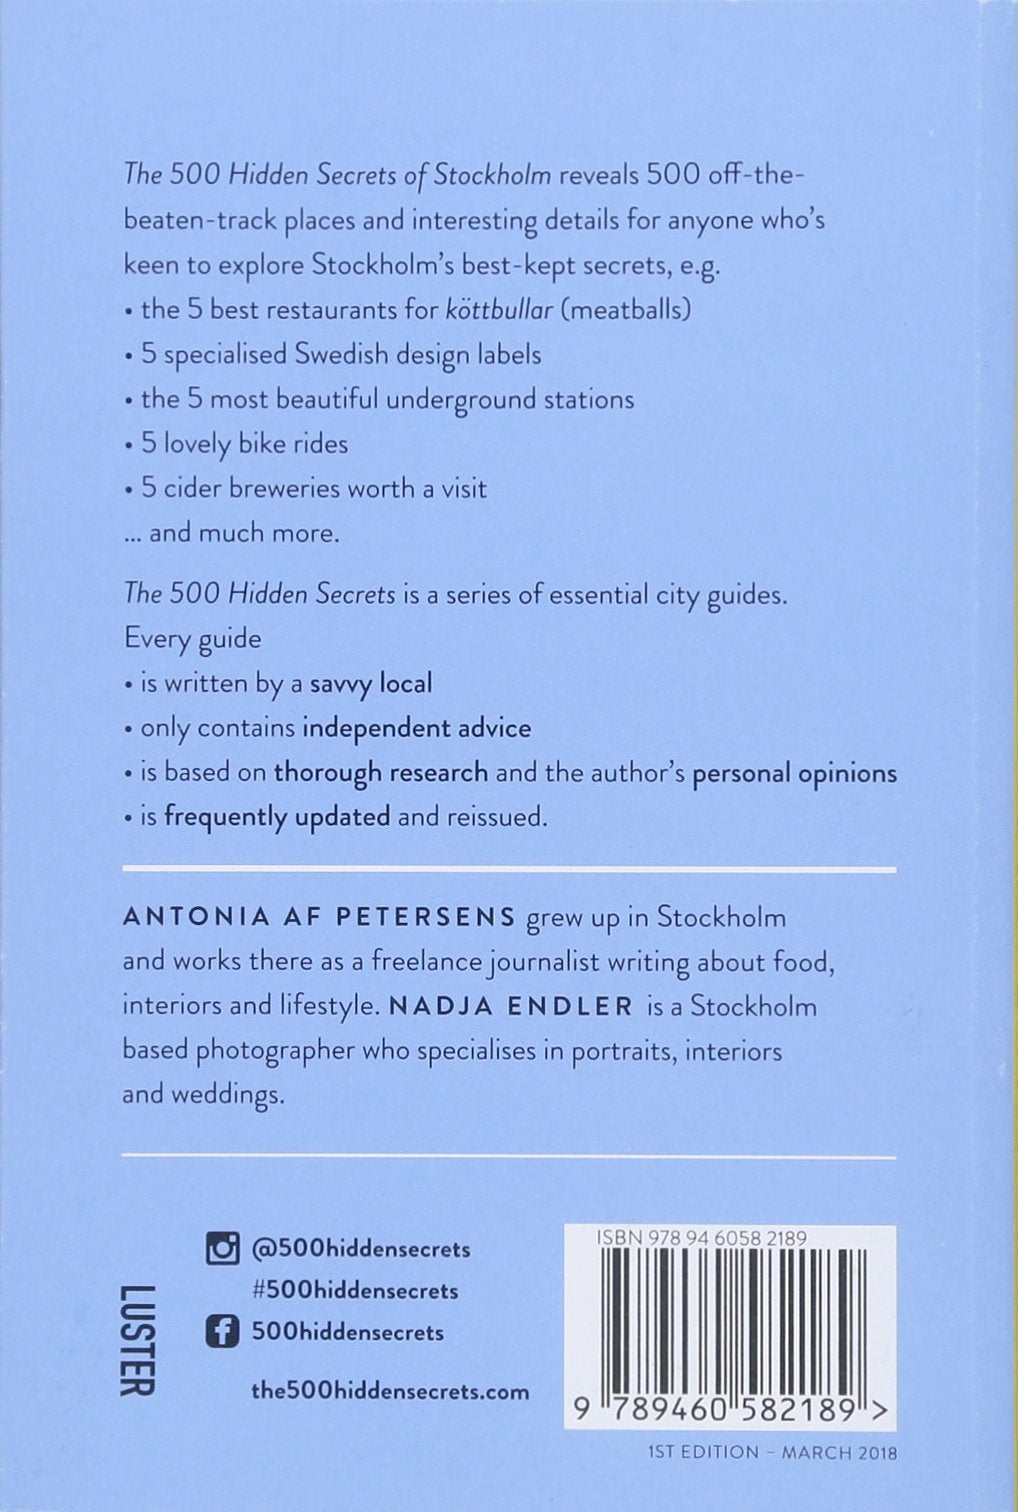 The 500 Hidden Secrets of Stockholm Book